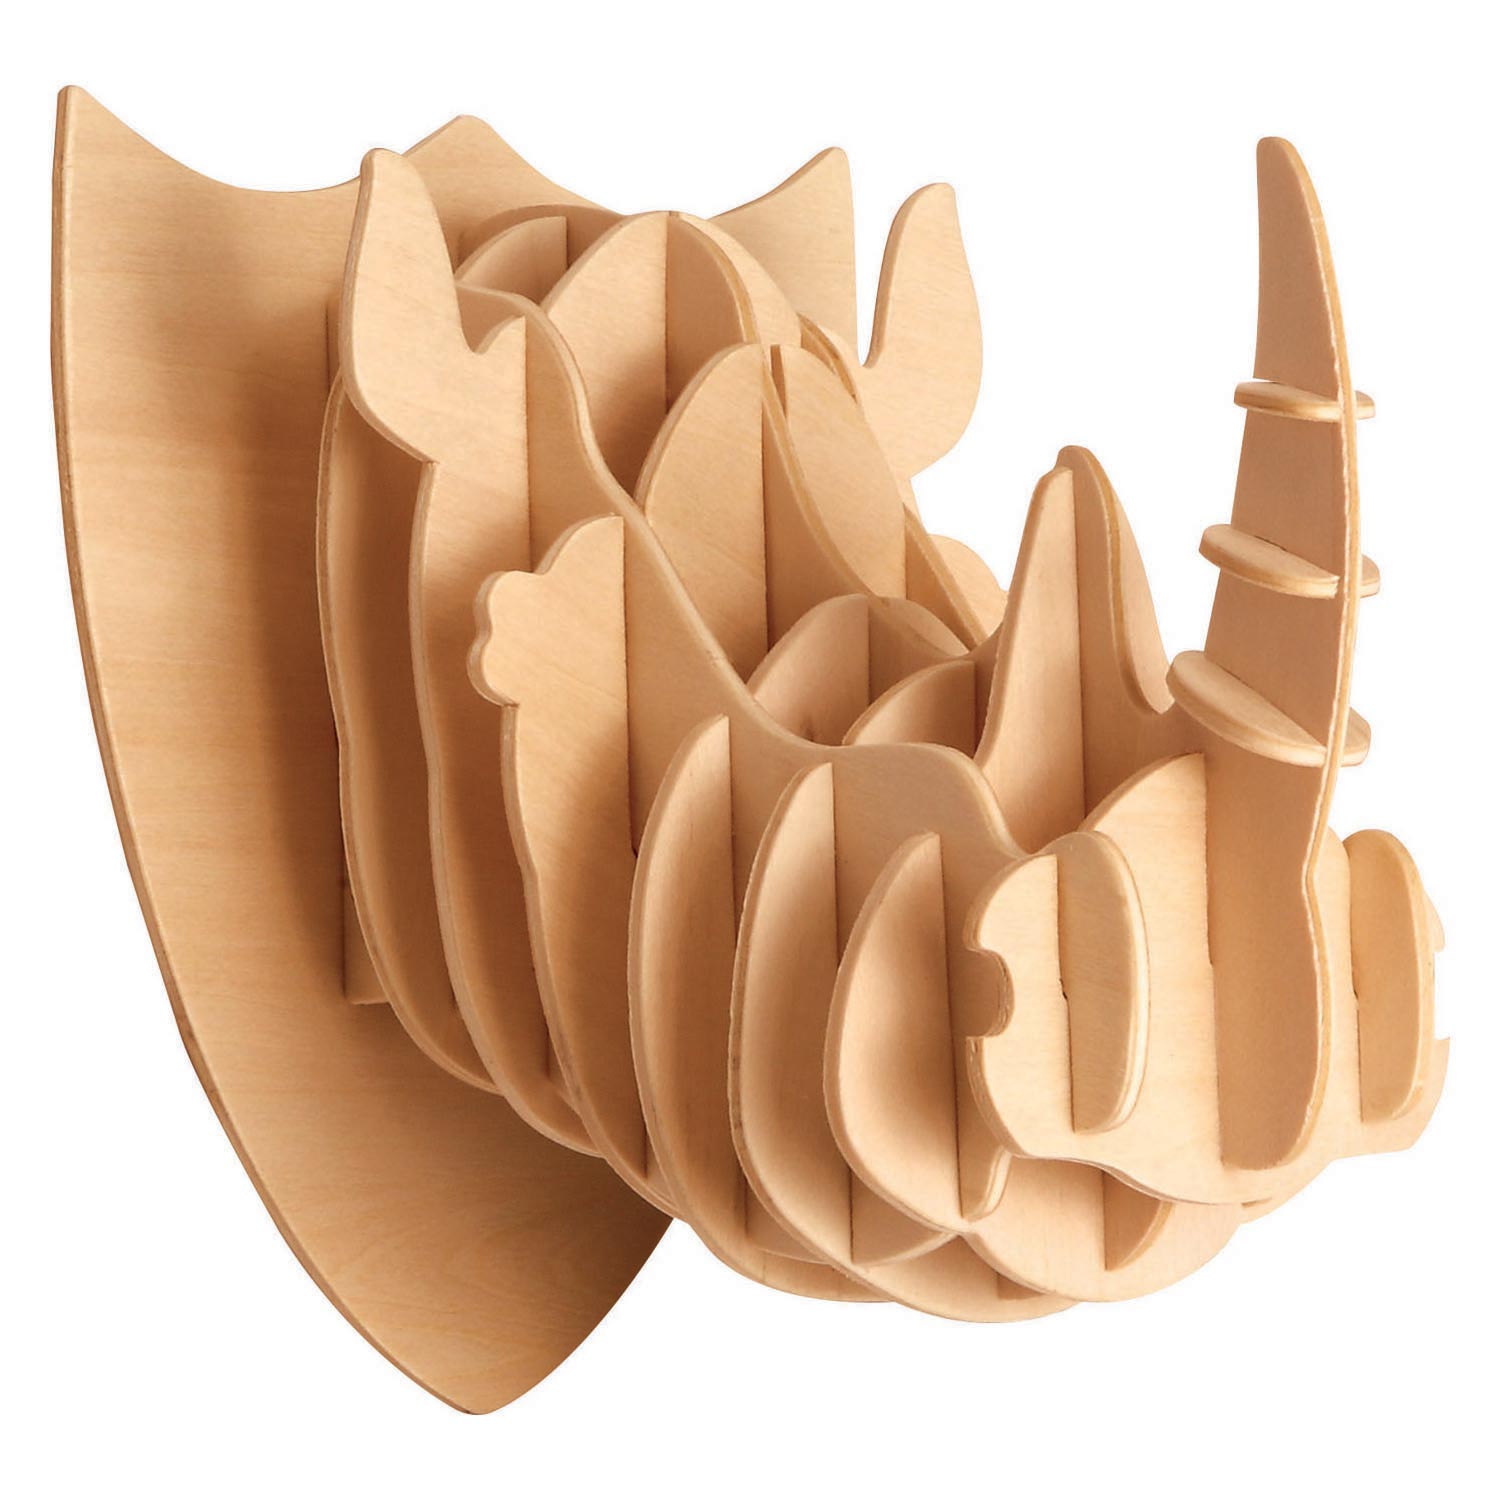 Gepetto's Workshop Holzbaukasten 3D - Nashorn